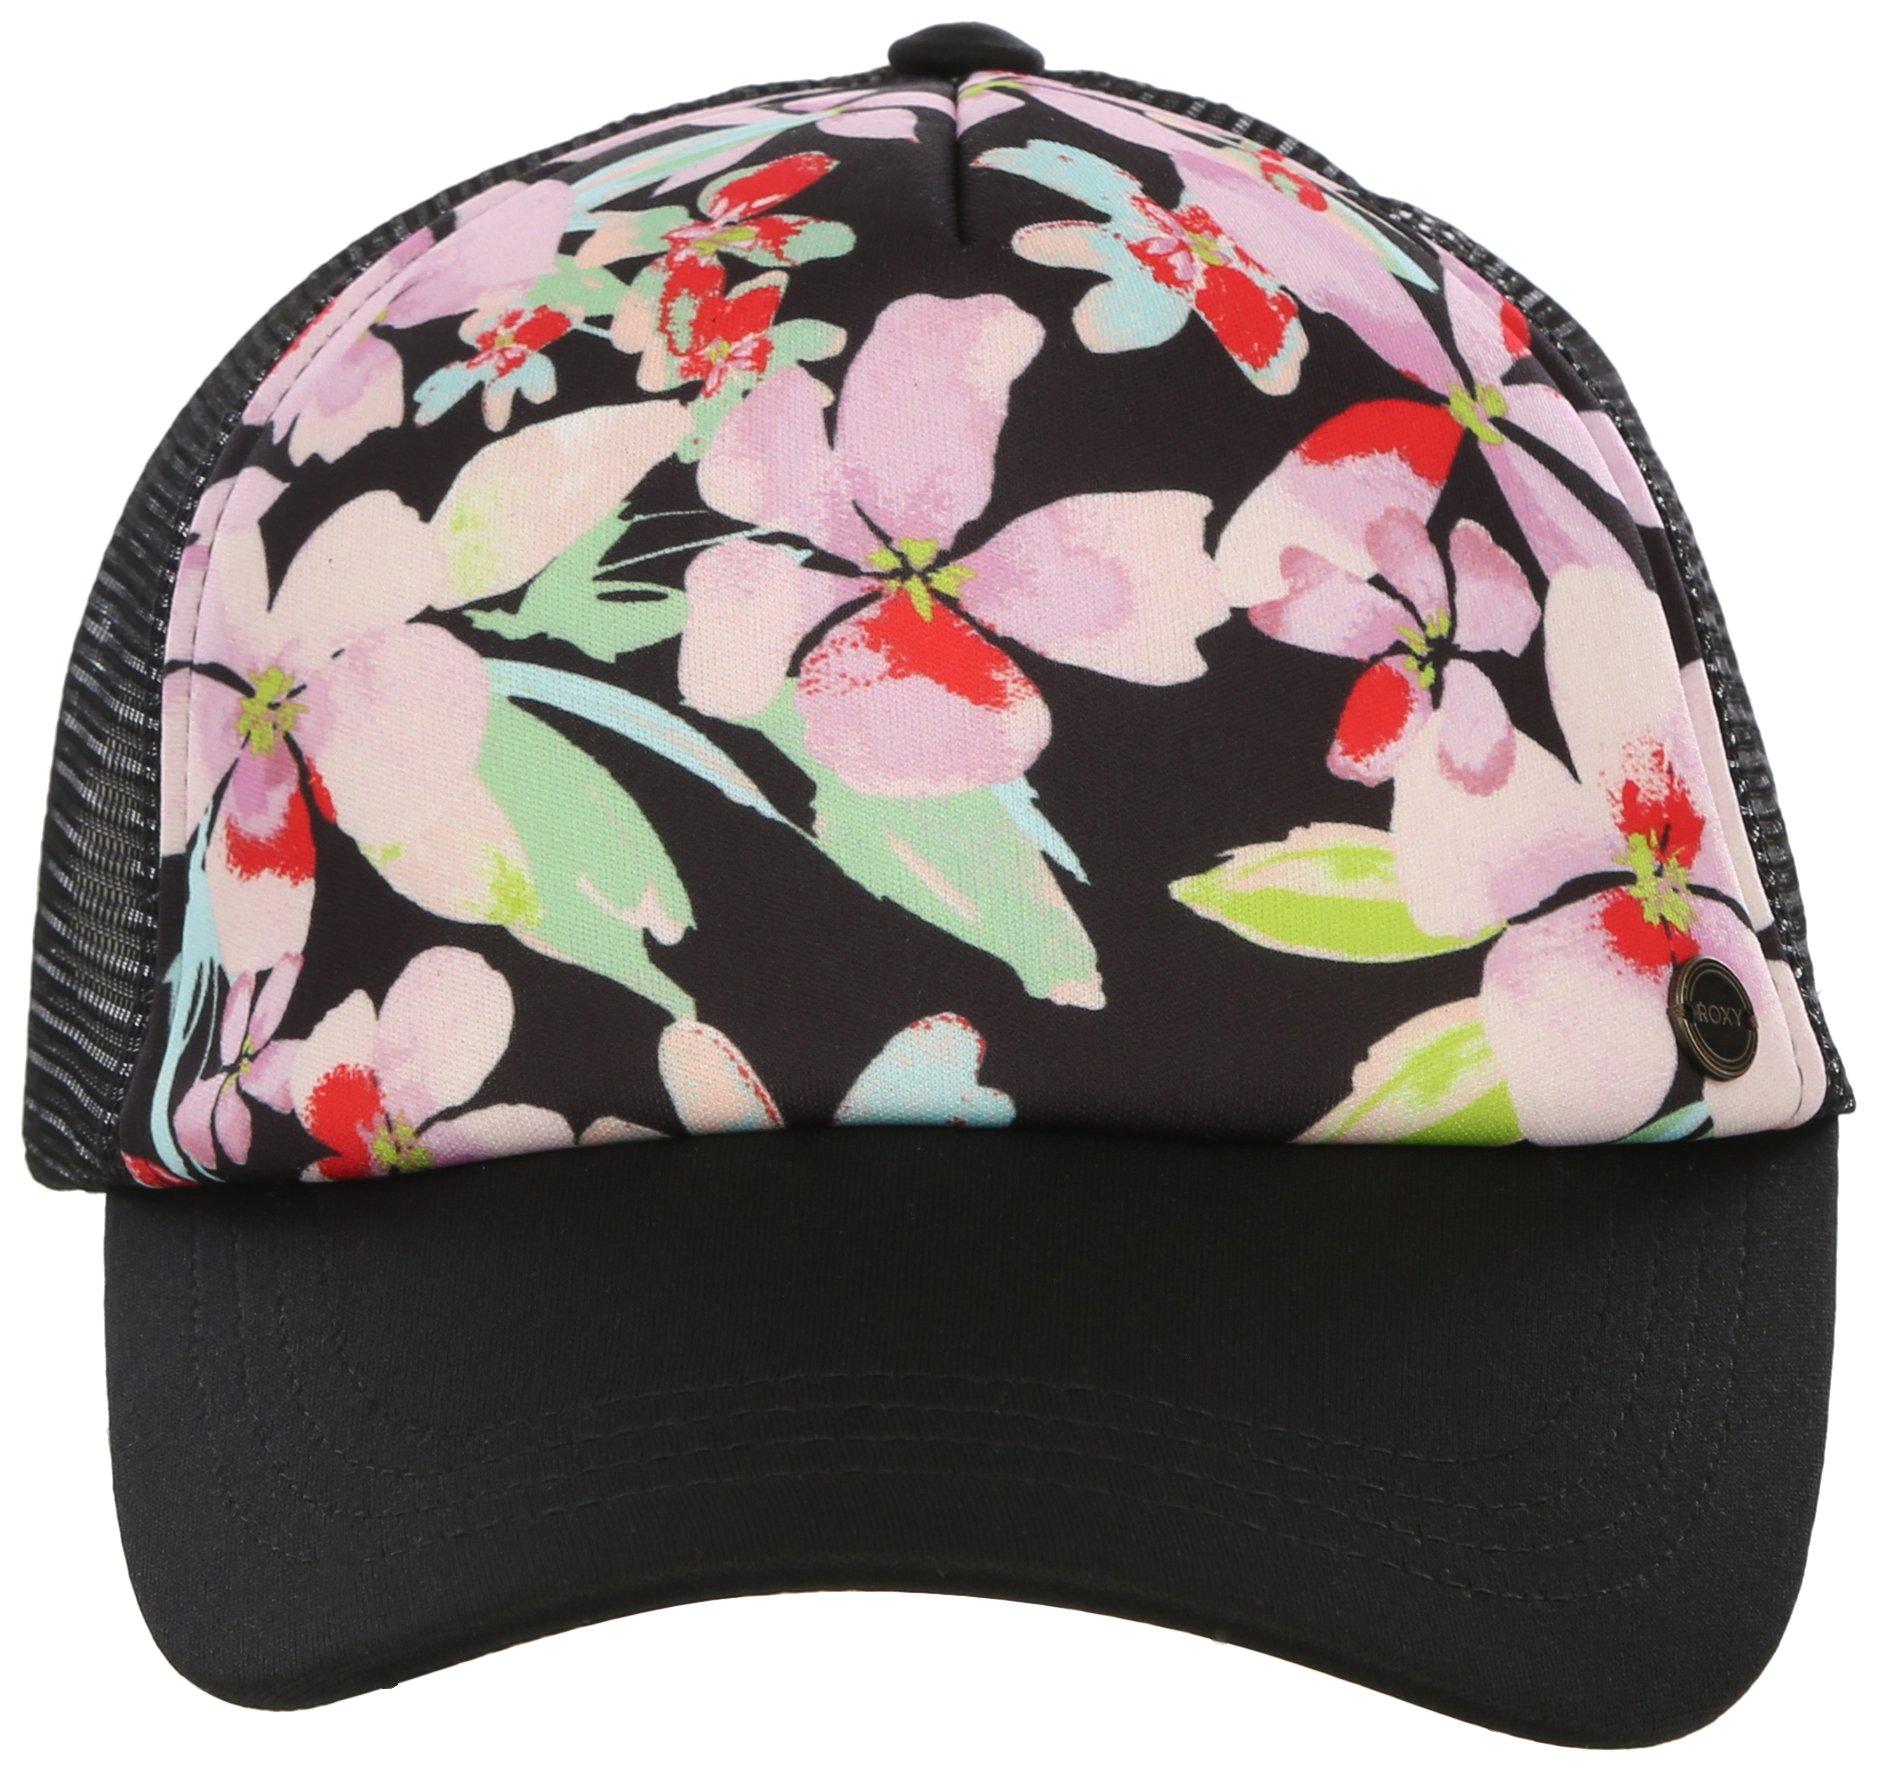 Roxy Womens Floral Mesh Baseball Hat